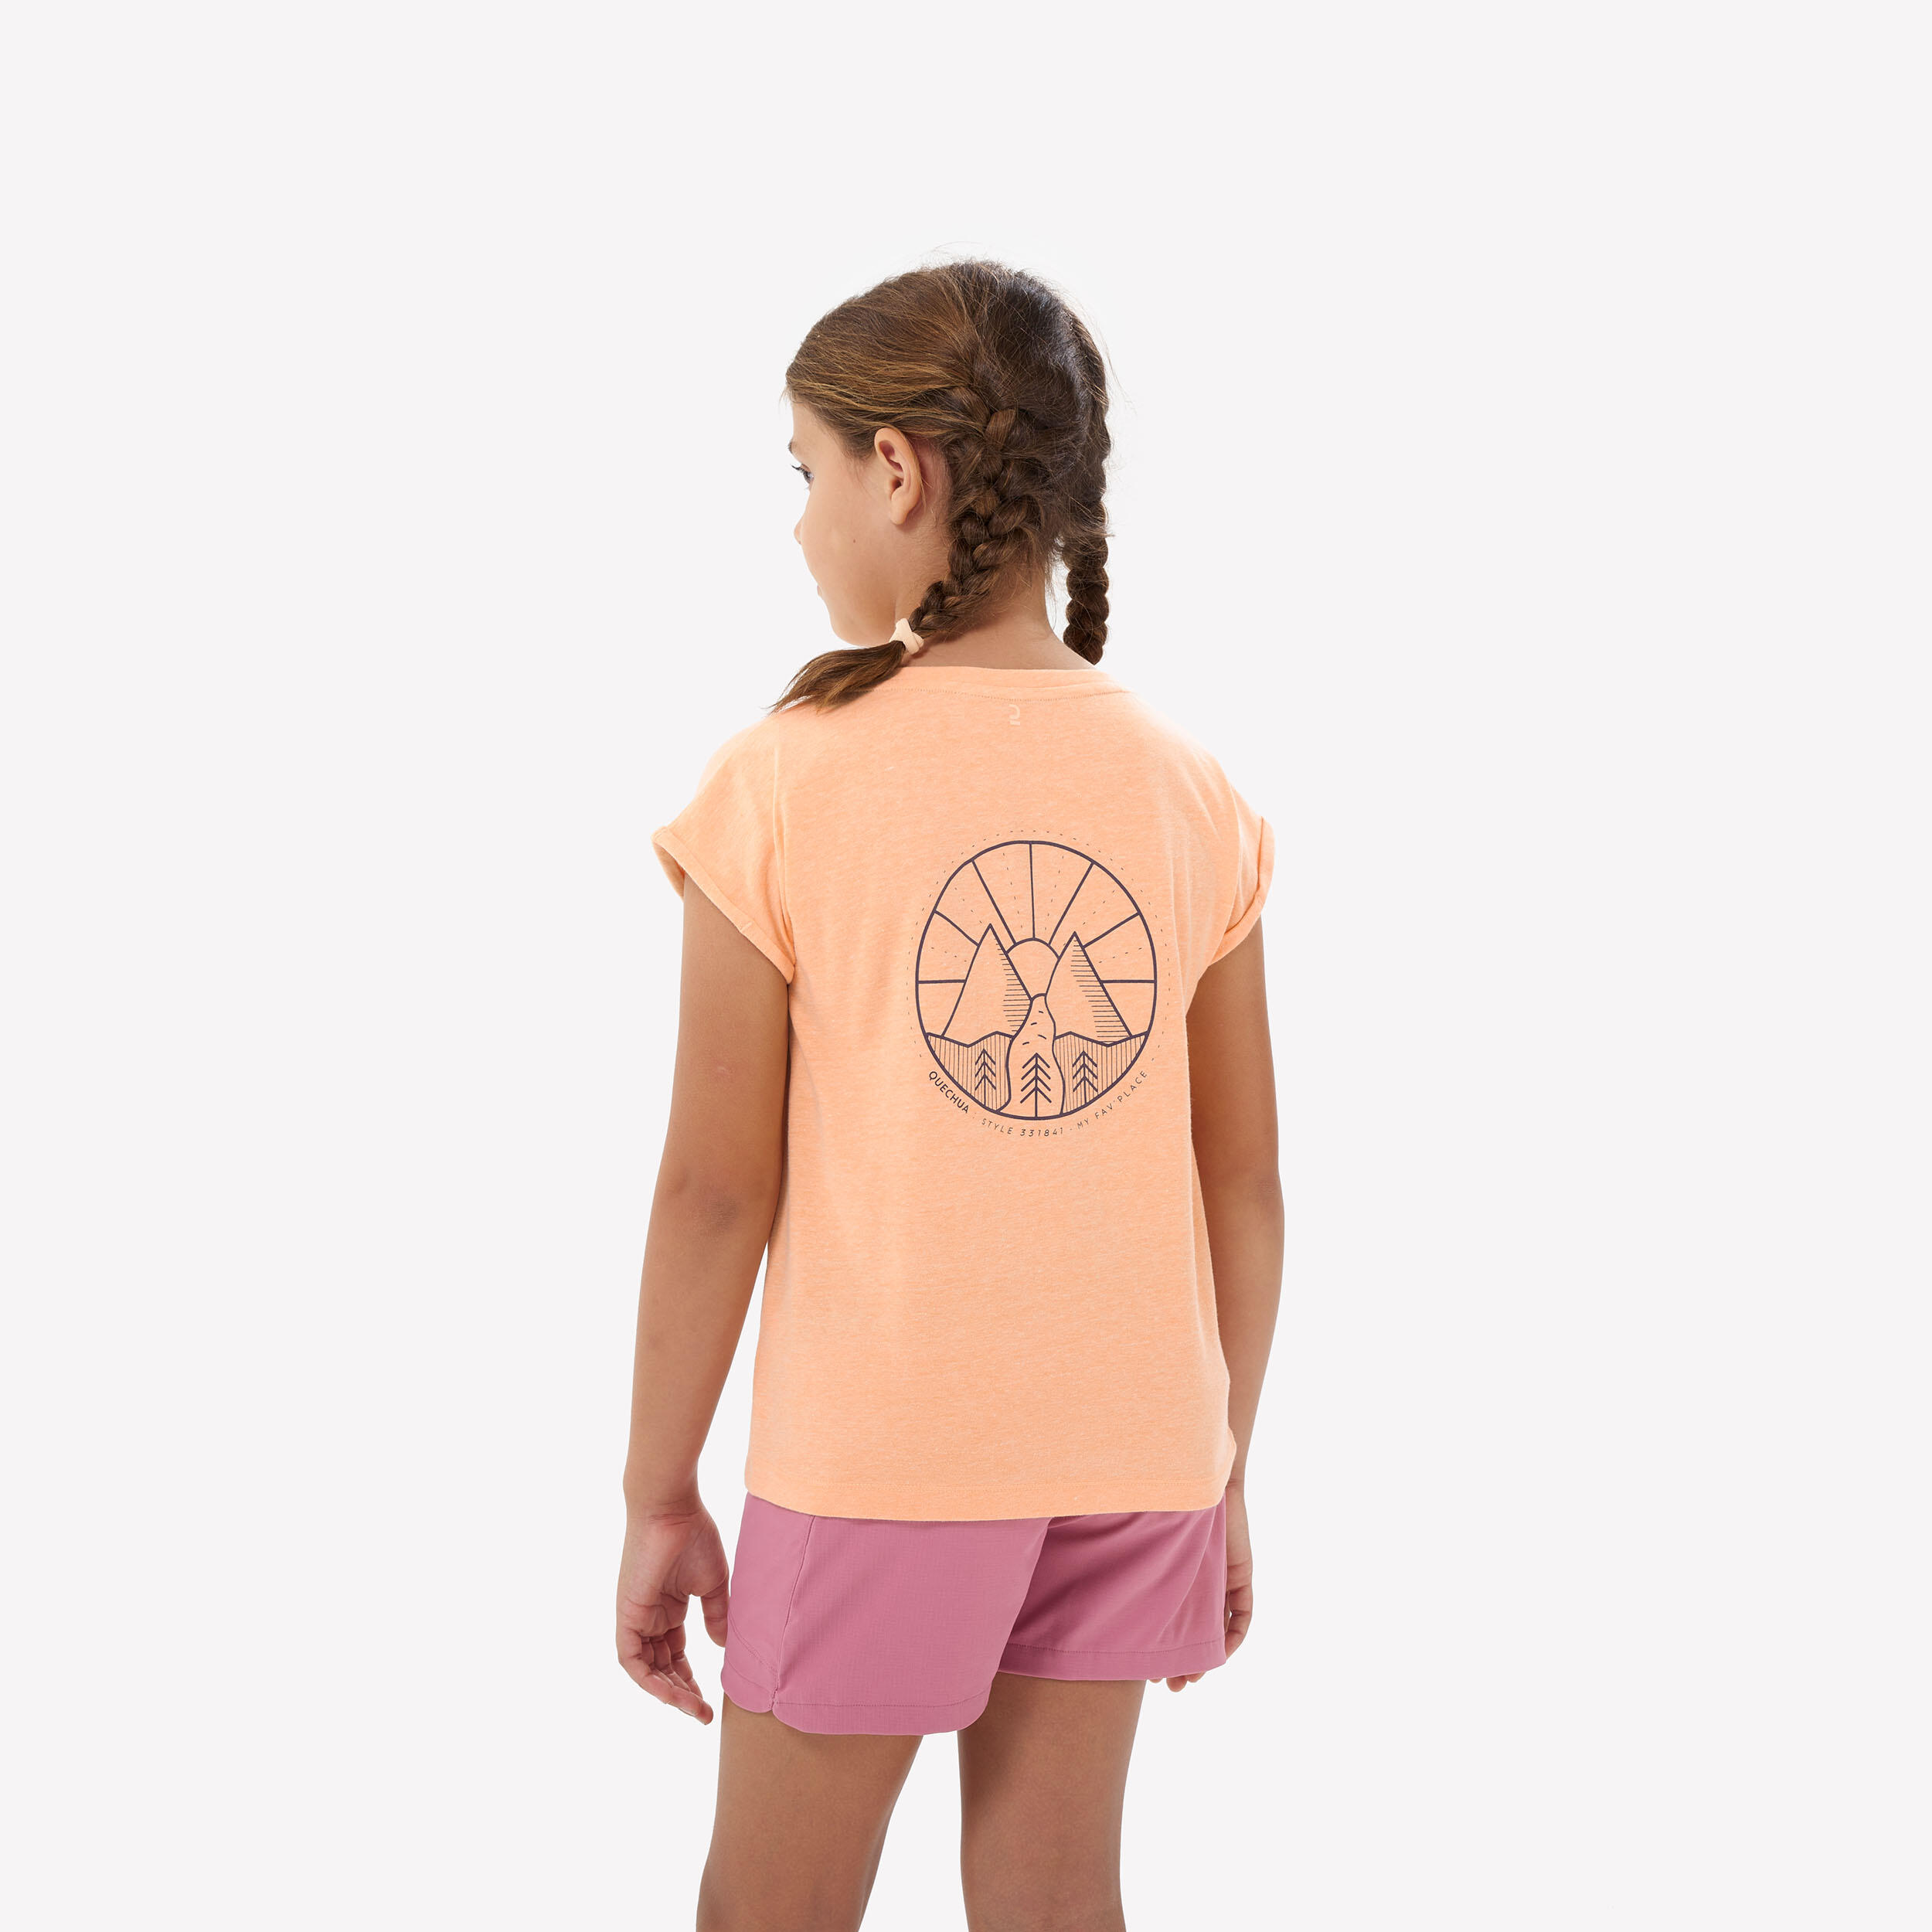 Girls’ Hiking T-shirt - MH100 Ages 7-15 - Orange 4/6